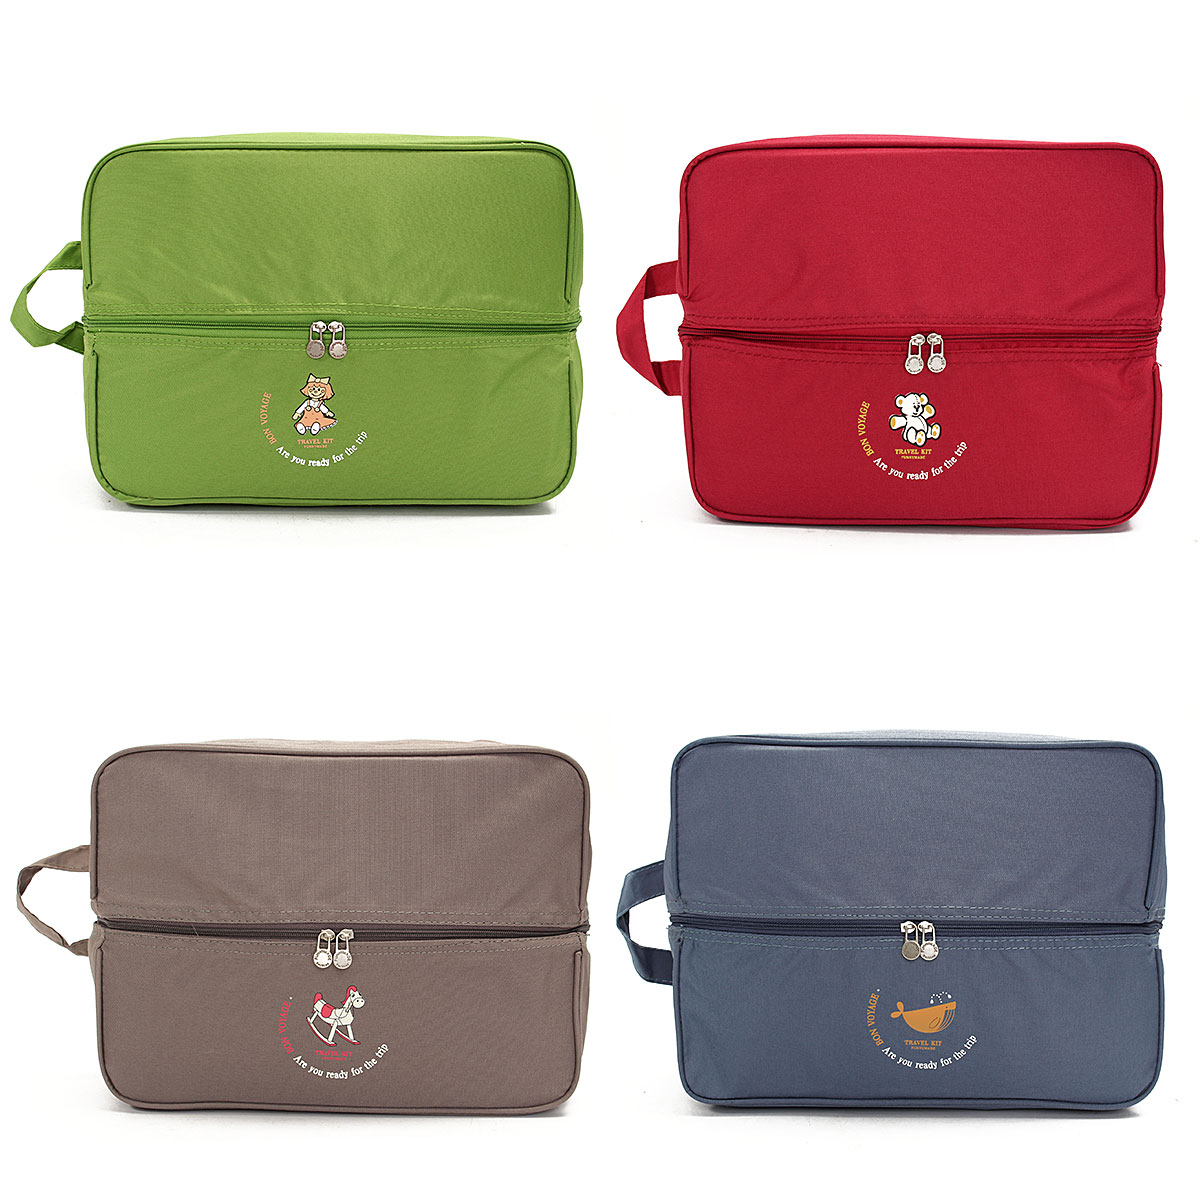 Portable-Nylon-Travel-Storage-Bag-Pouch-Bag-Case-Luggage-Cosmetic-Organizer-1460329-3